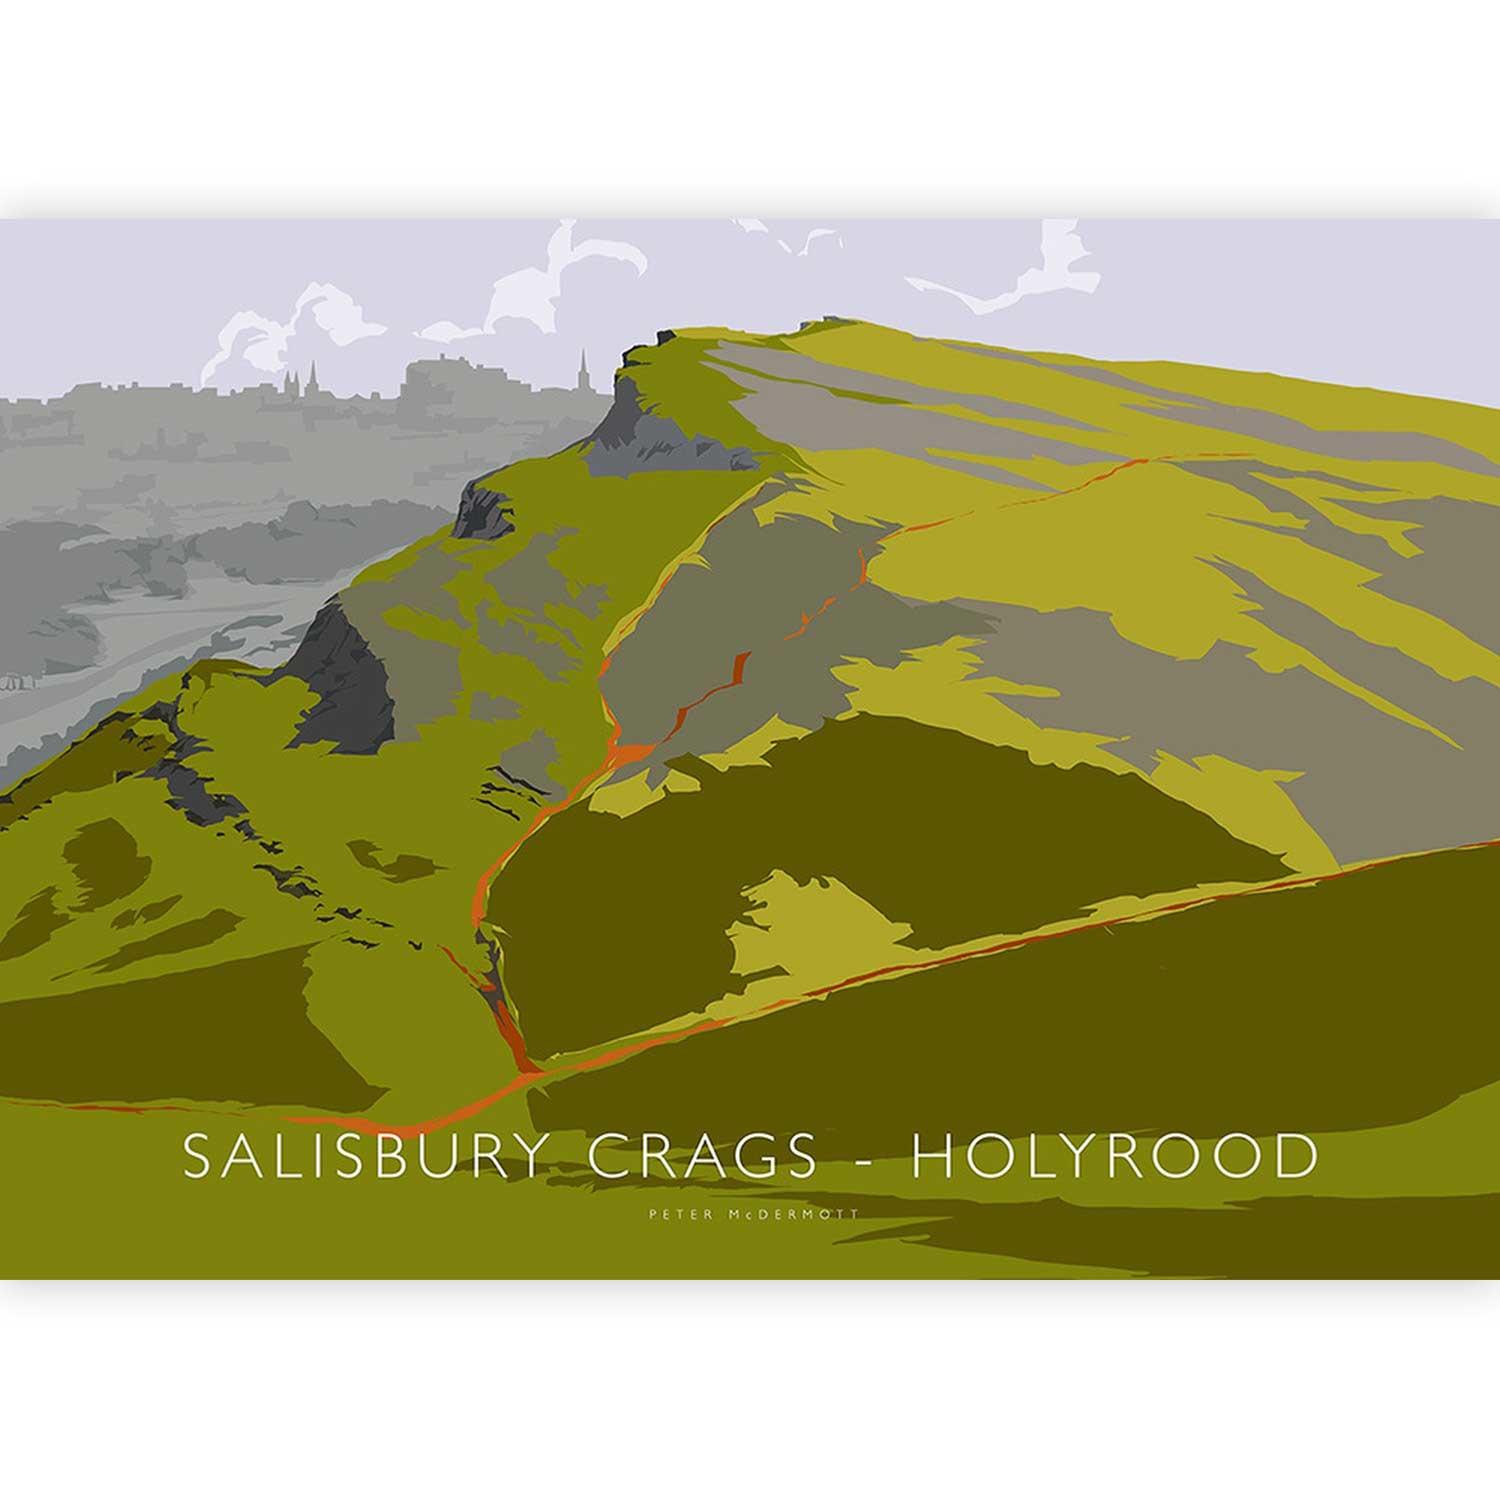 Salisbury Crags Holyrood by Peter McDermott